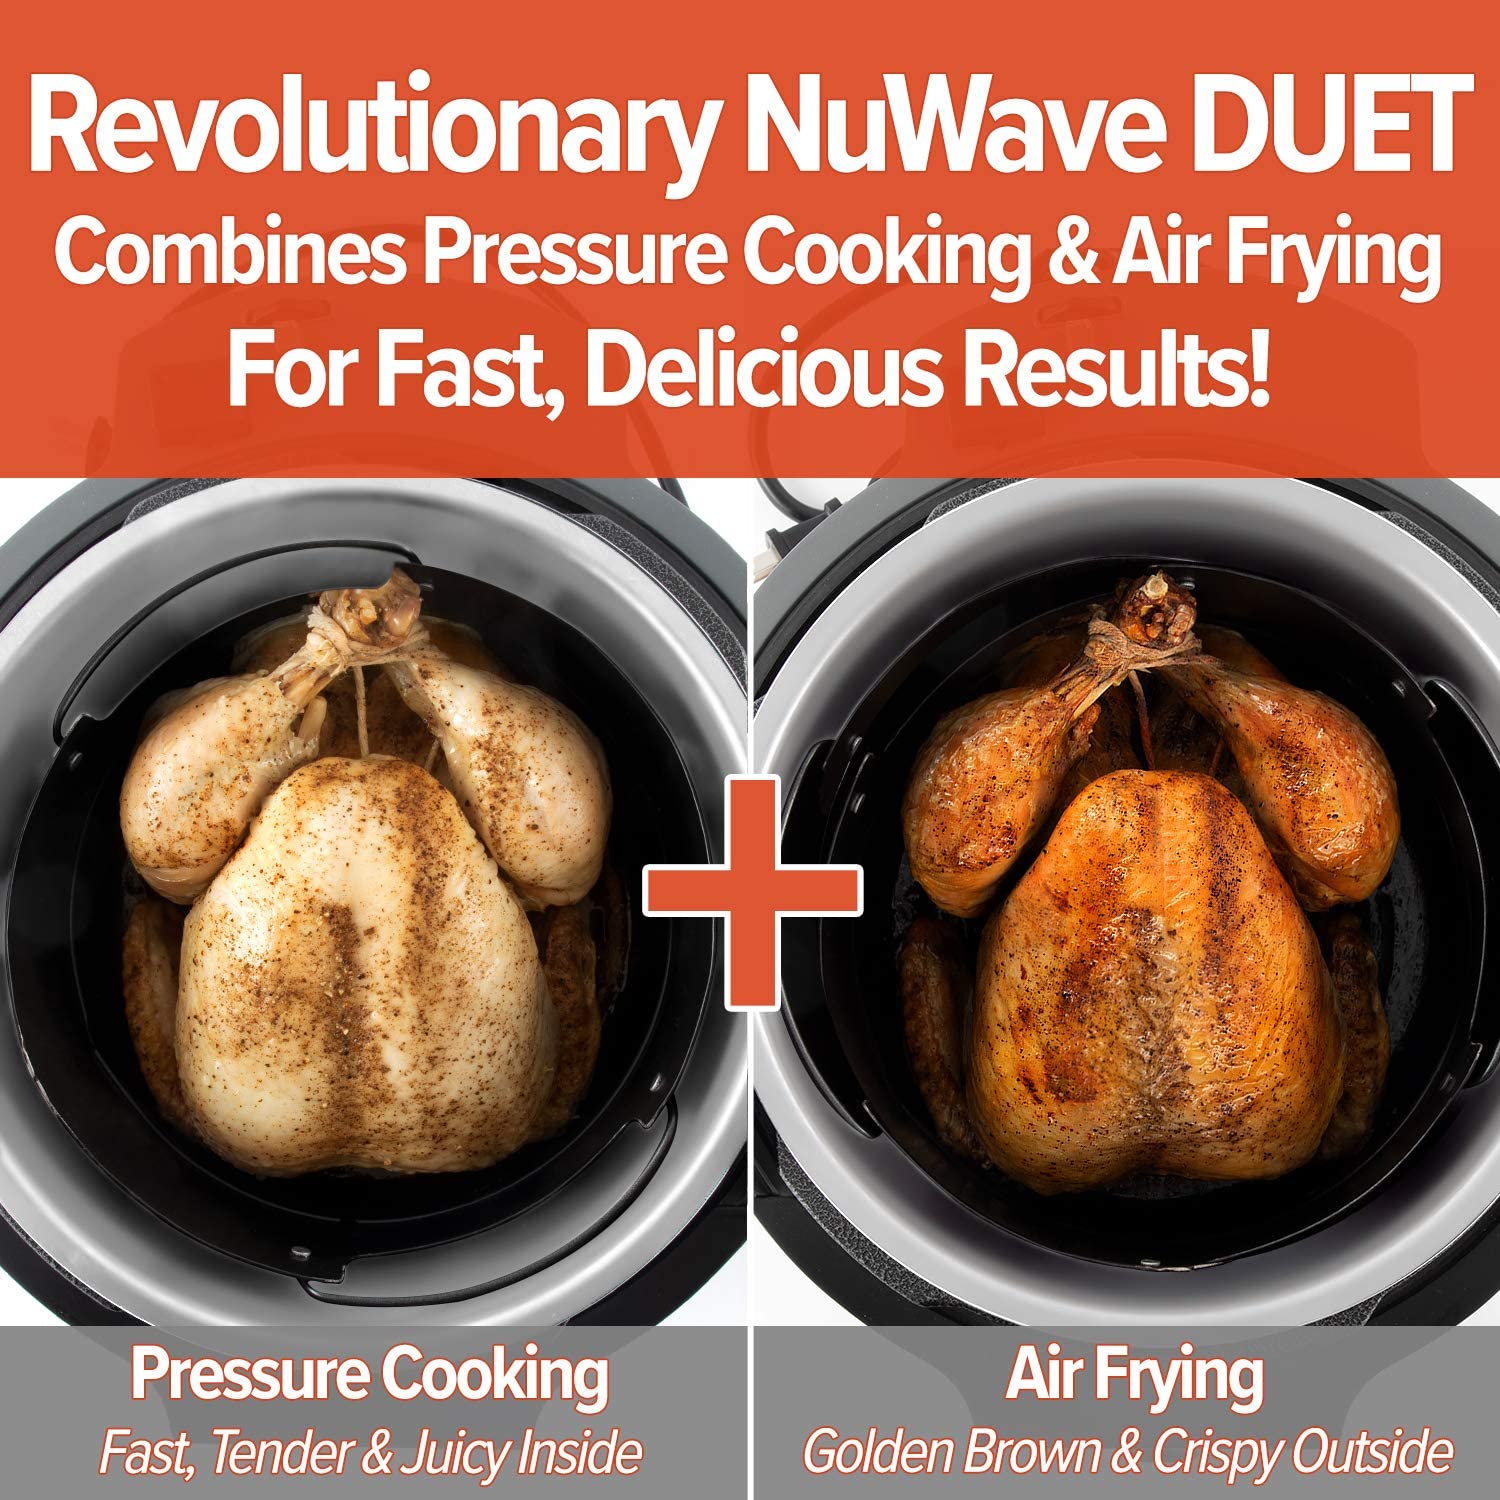 NuWave Duet Electric Pressure Cooker & Air Fryer Combo